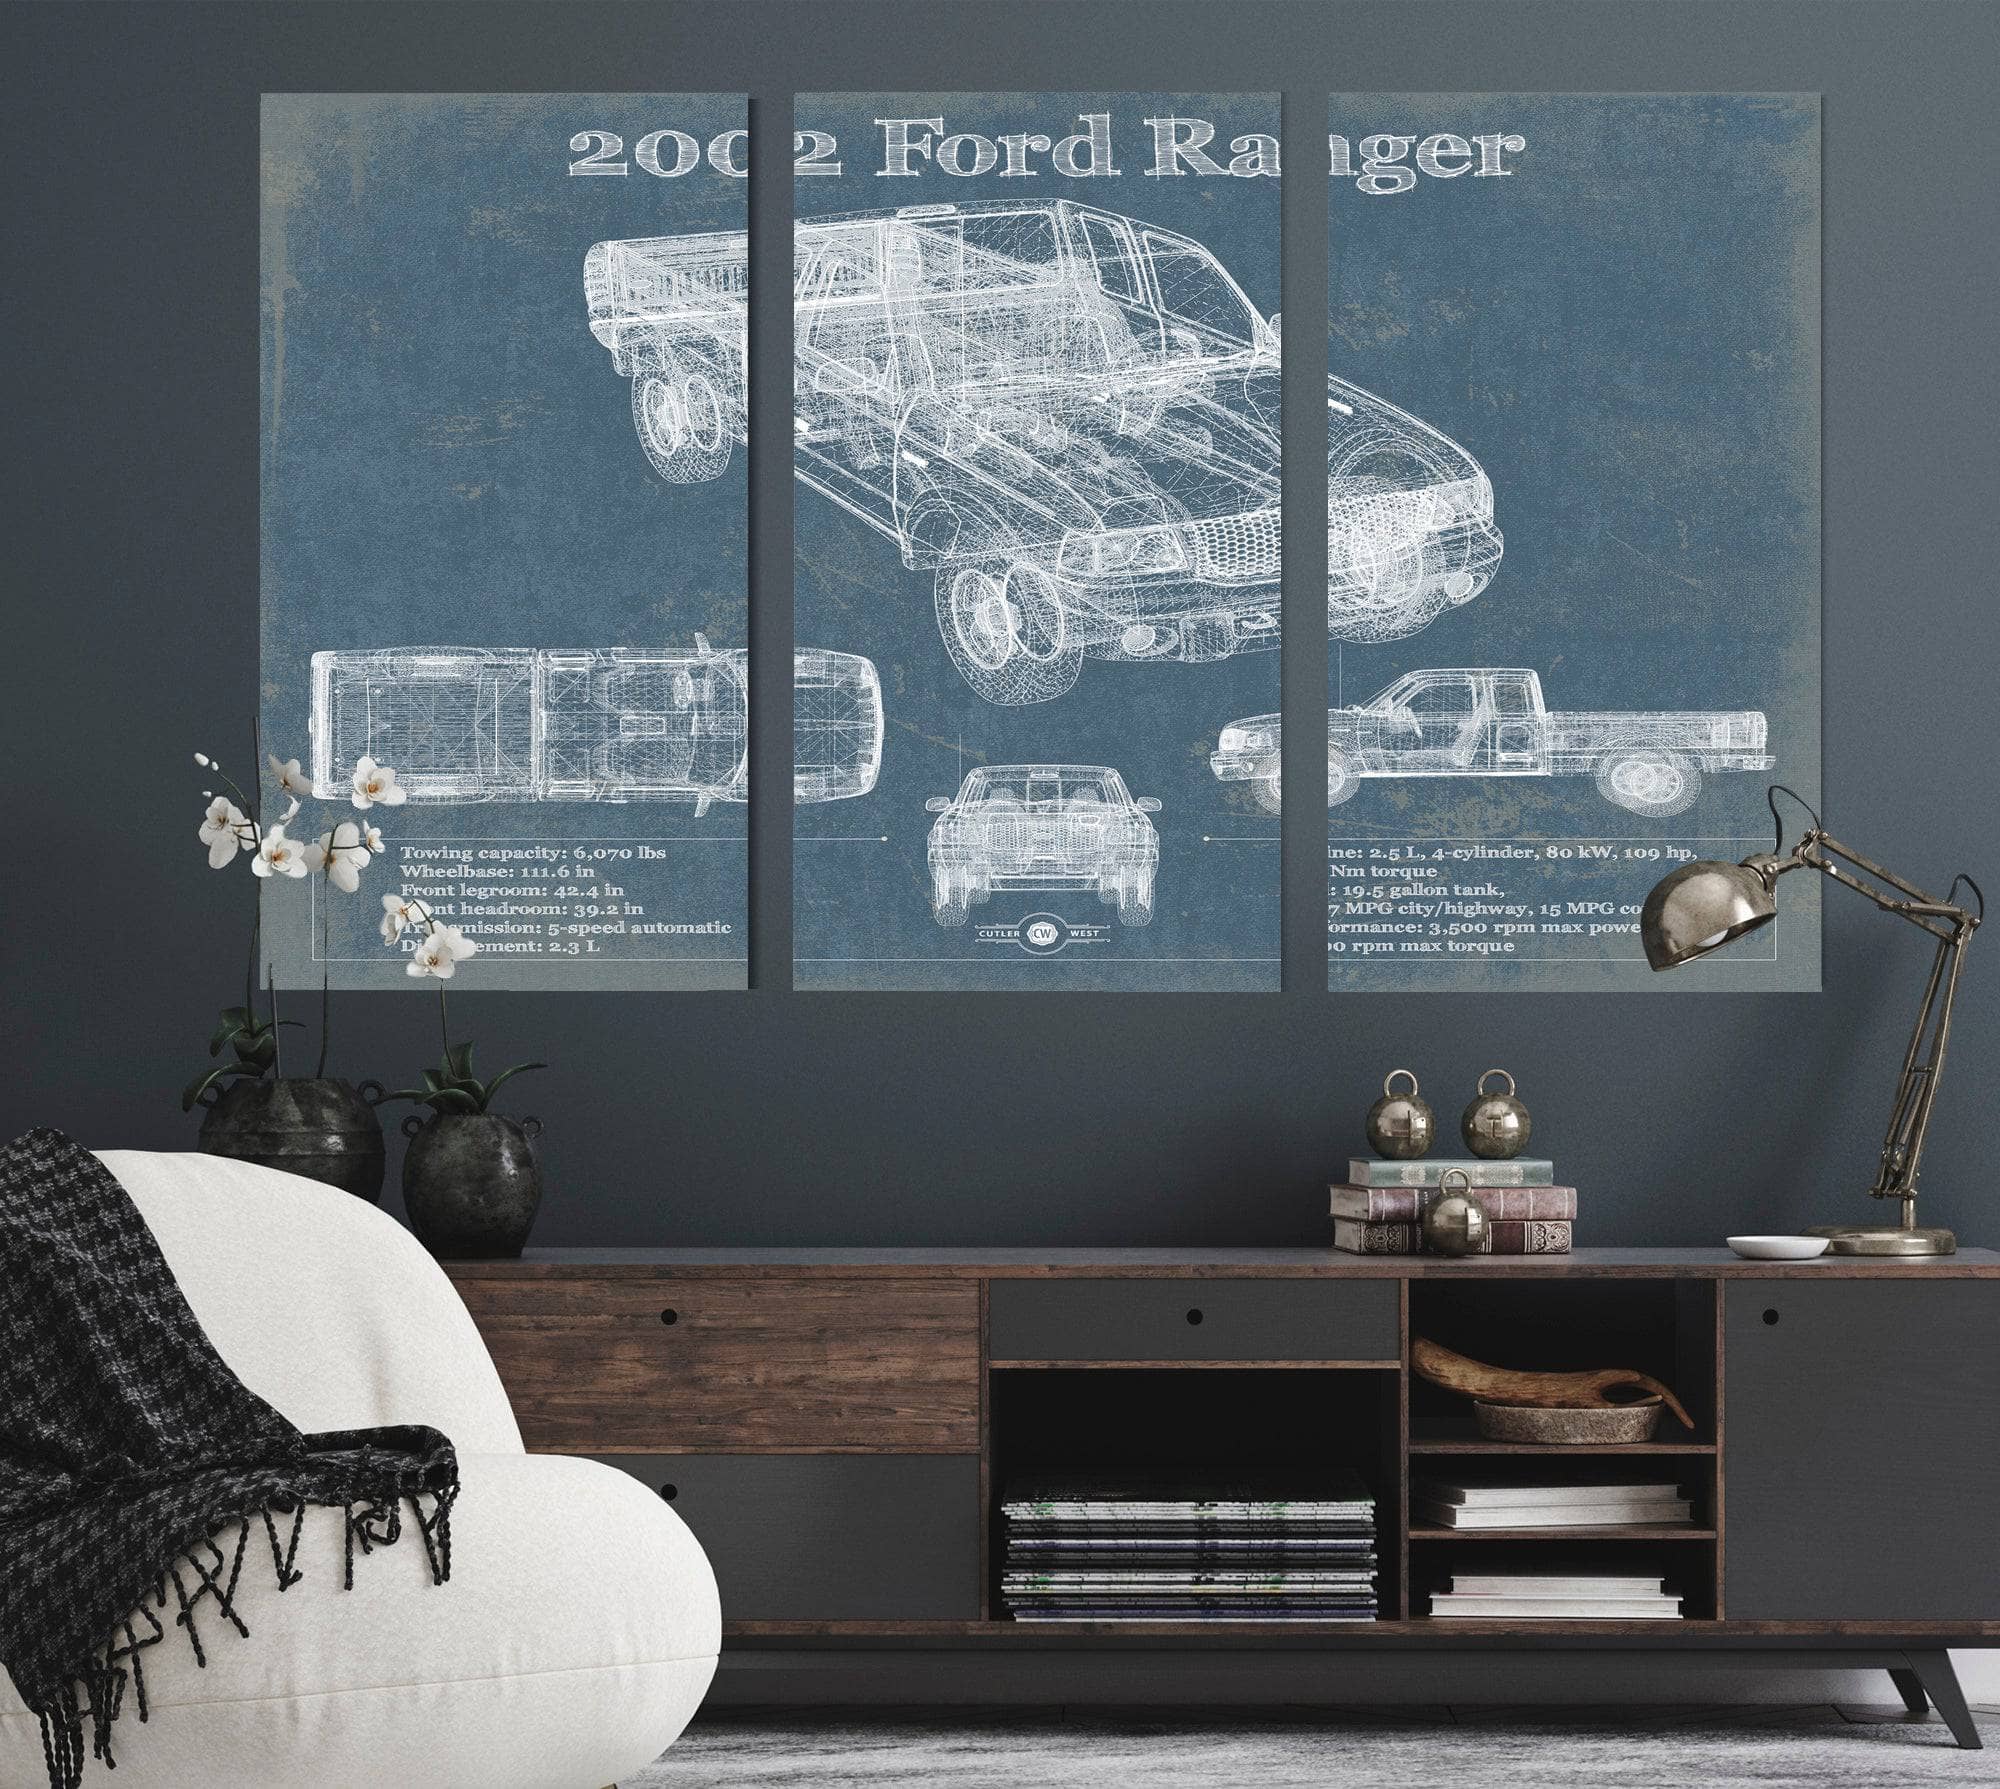 2002 Ford Ranger Vintage Blueprint Auto Print